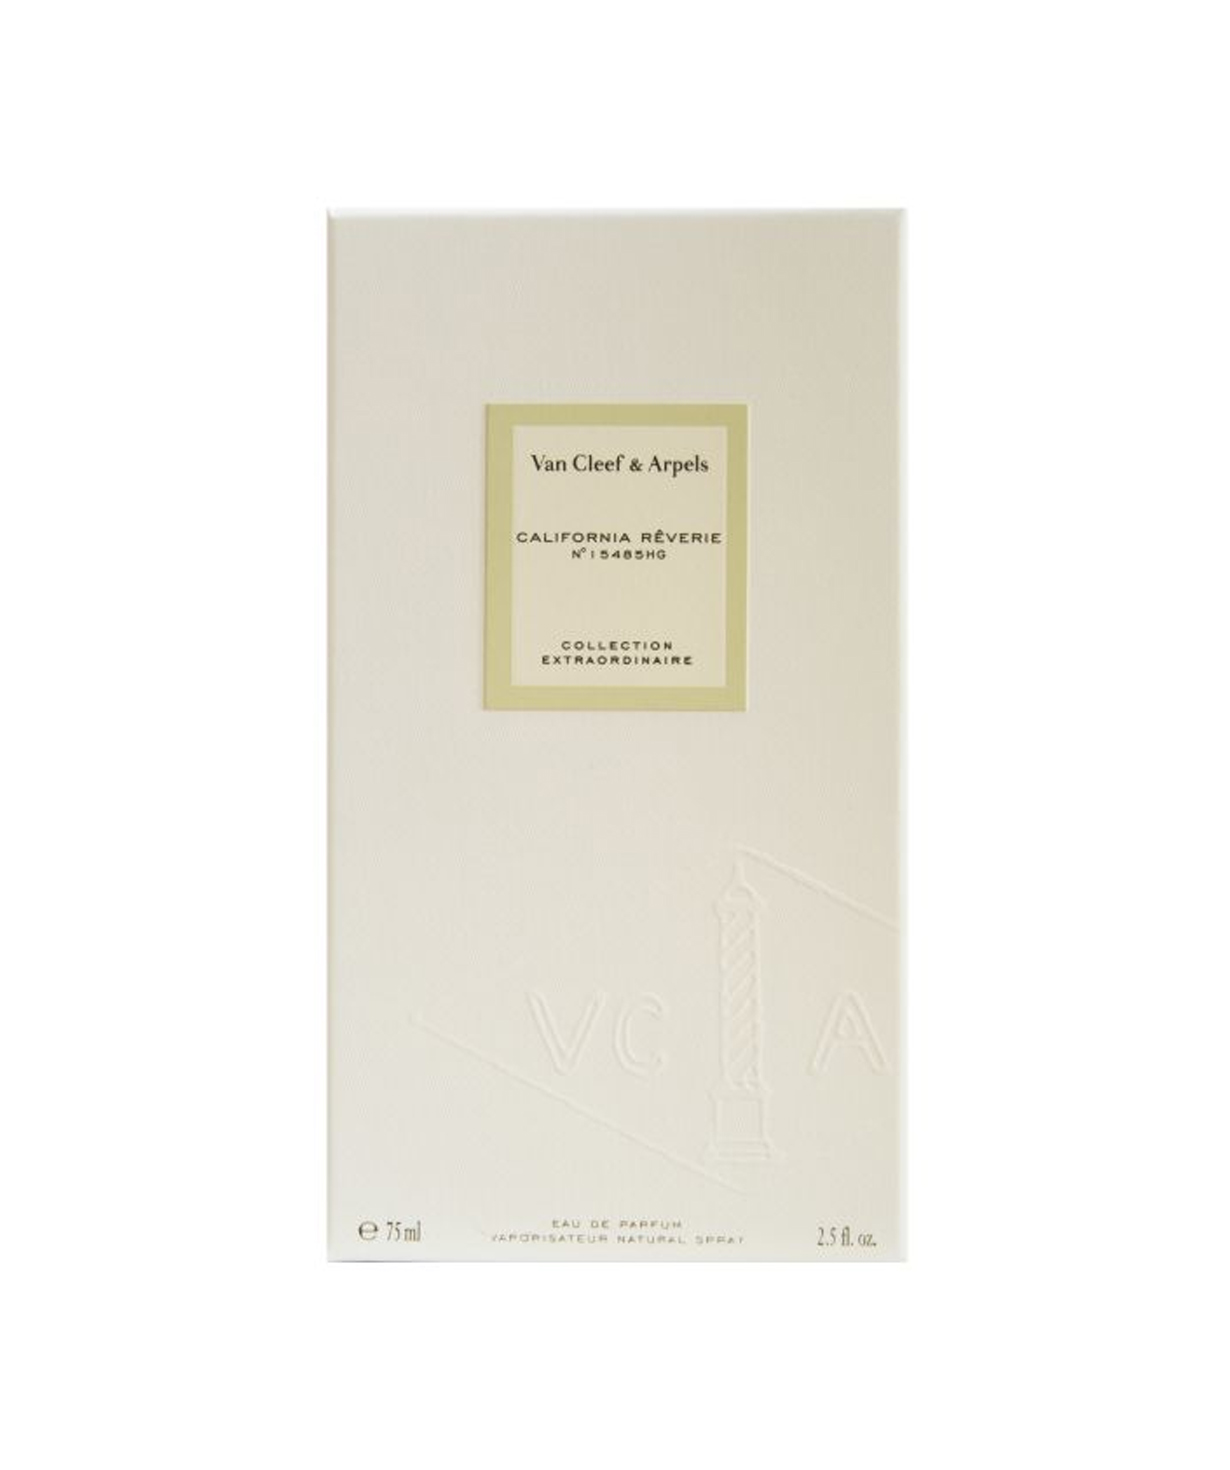 Perfume «Van Cleef & Arpels» California Reverie CE, for women, 75 ml